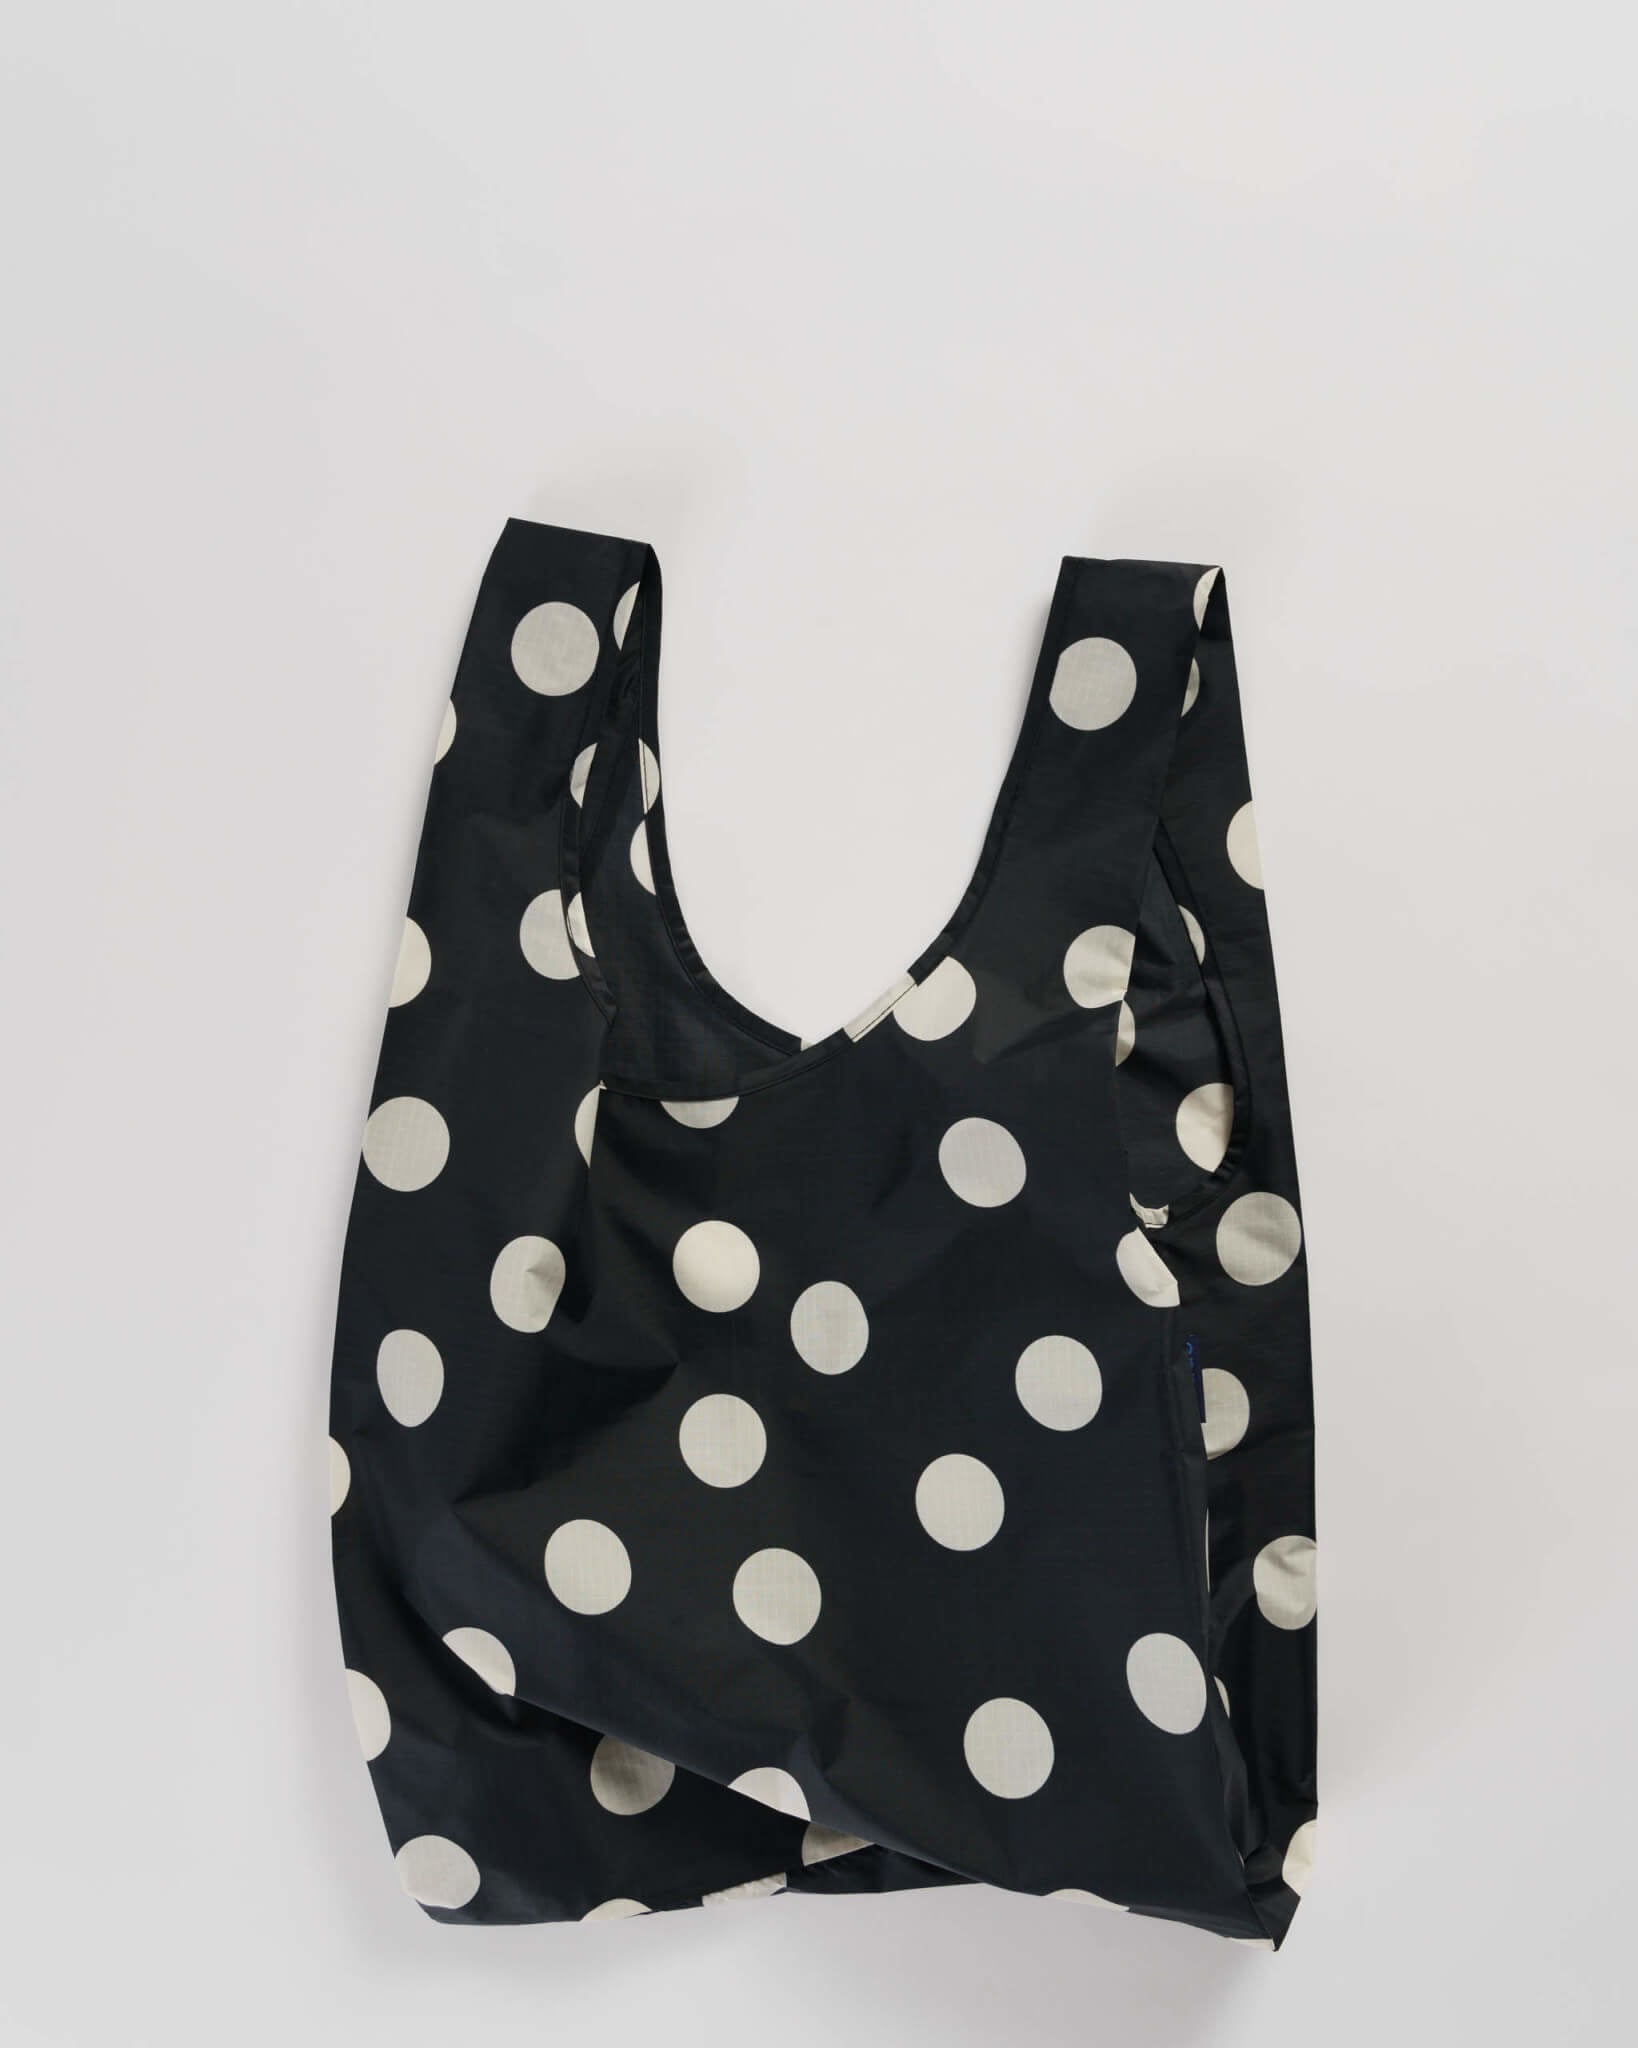 Reusable shopping bag with white polka-dot pattern